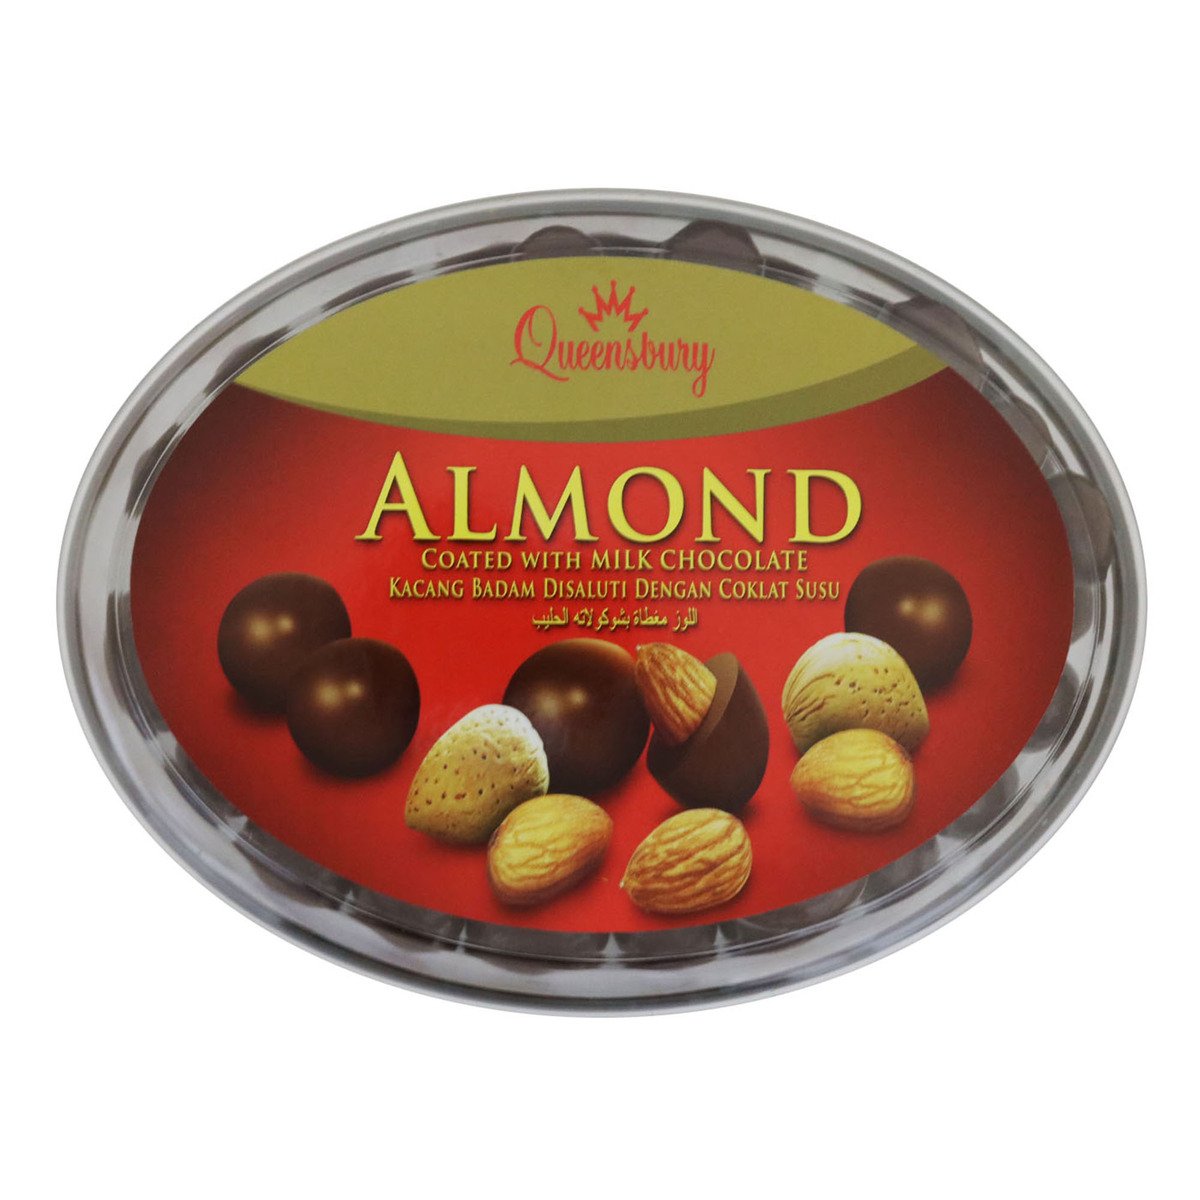 Queensbeery Milk Chocolate Almond Oval 450g